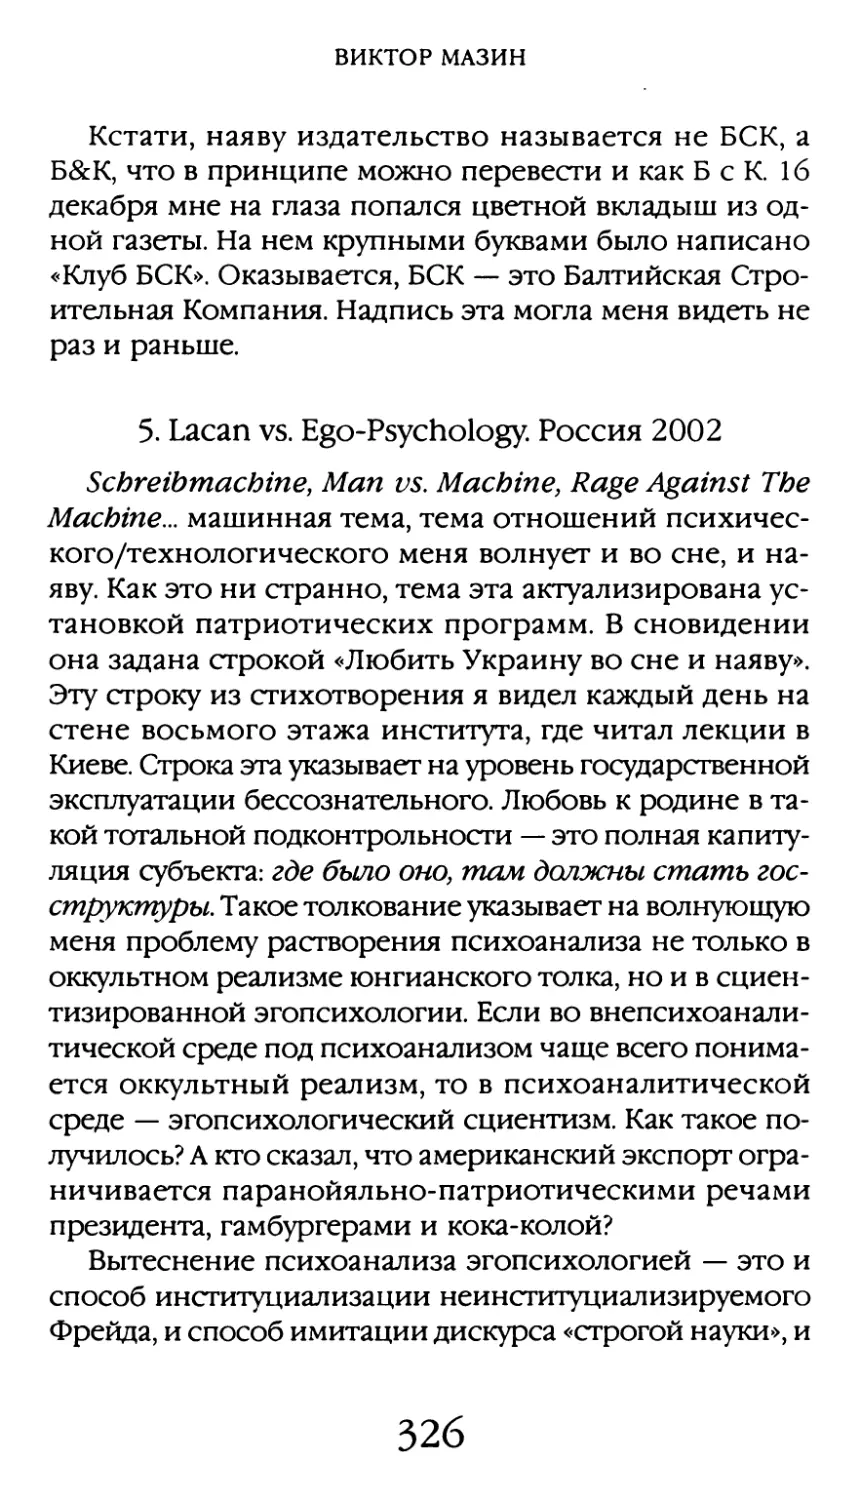 5. Lacan vs Ego-Psychology. Россия 2002